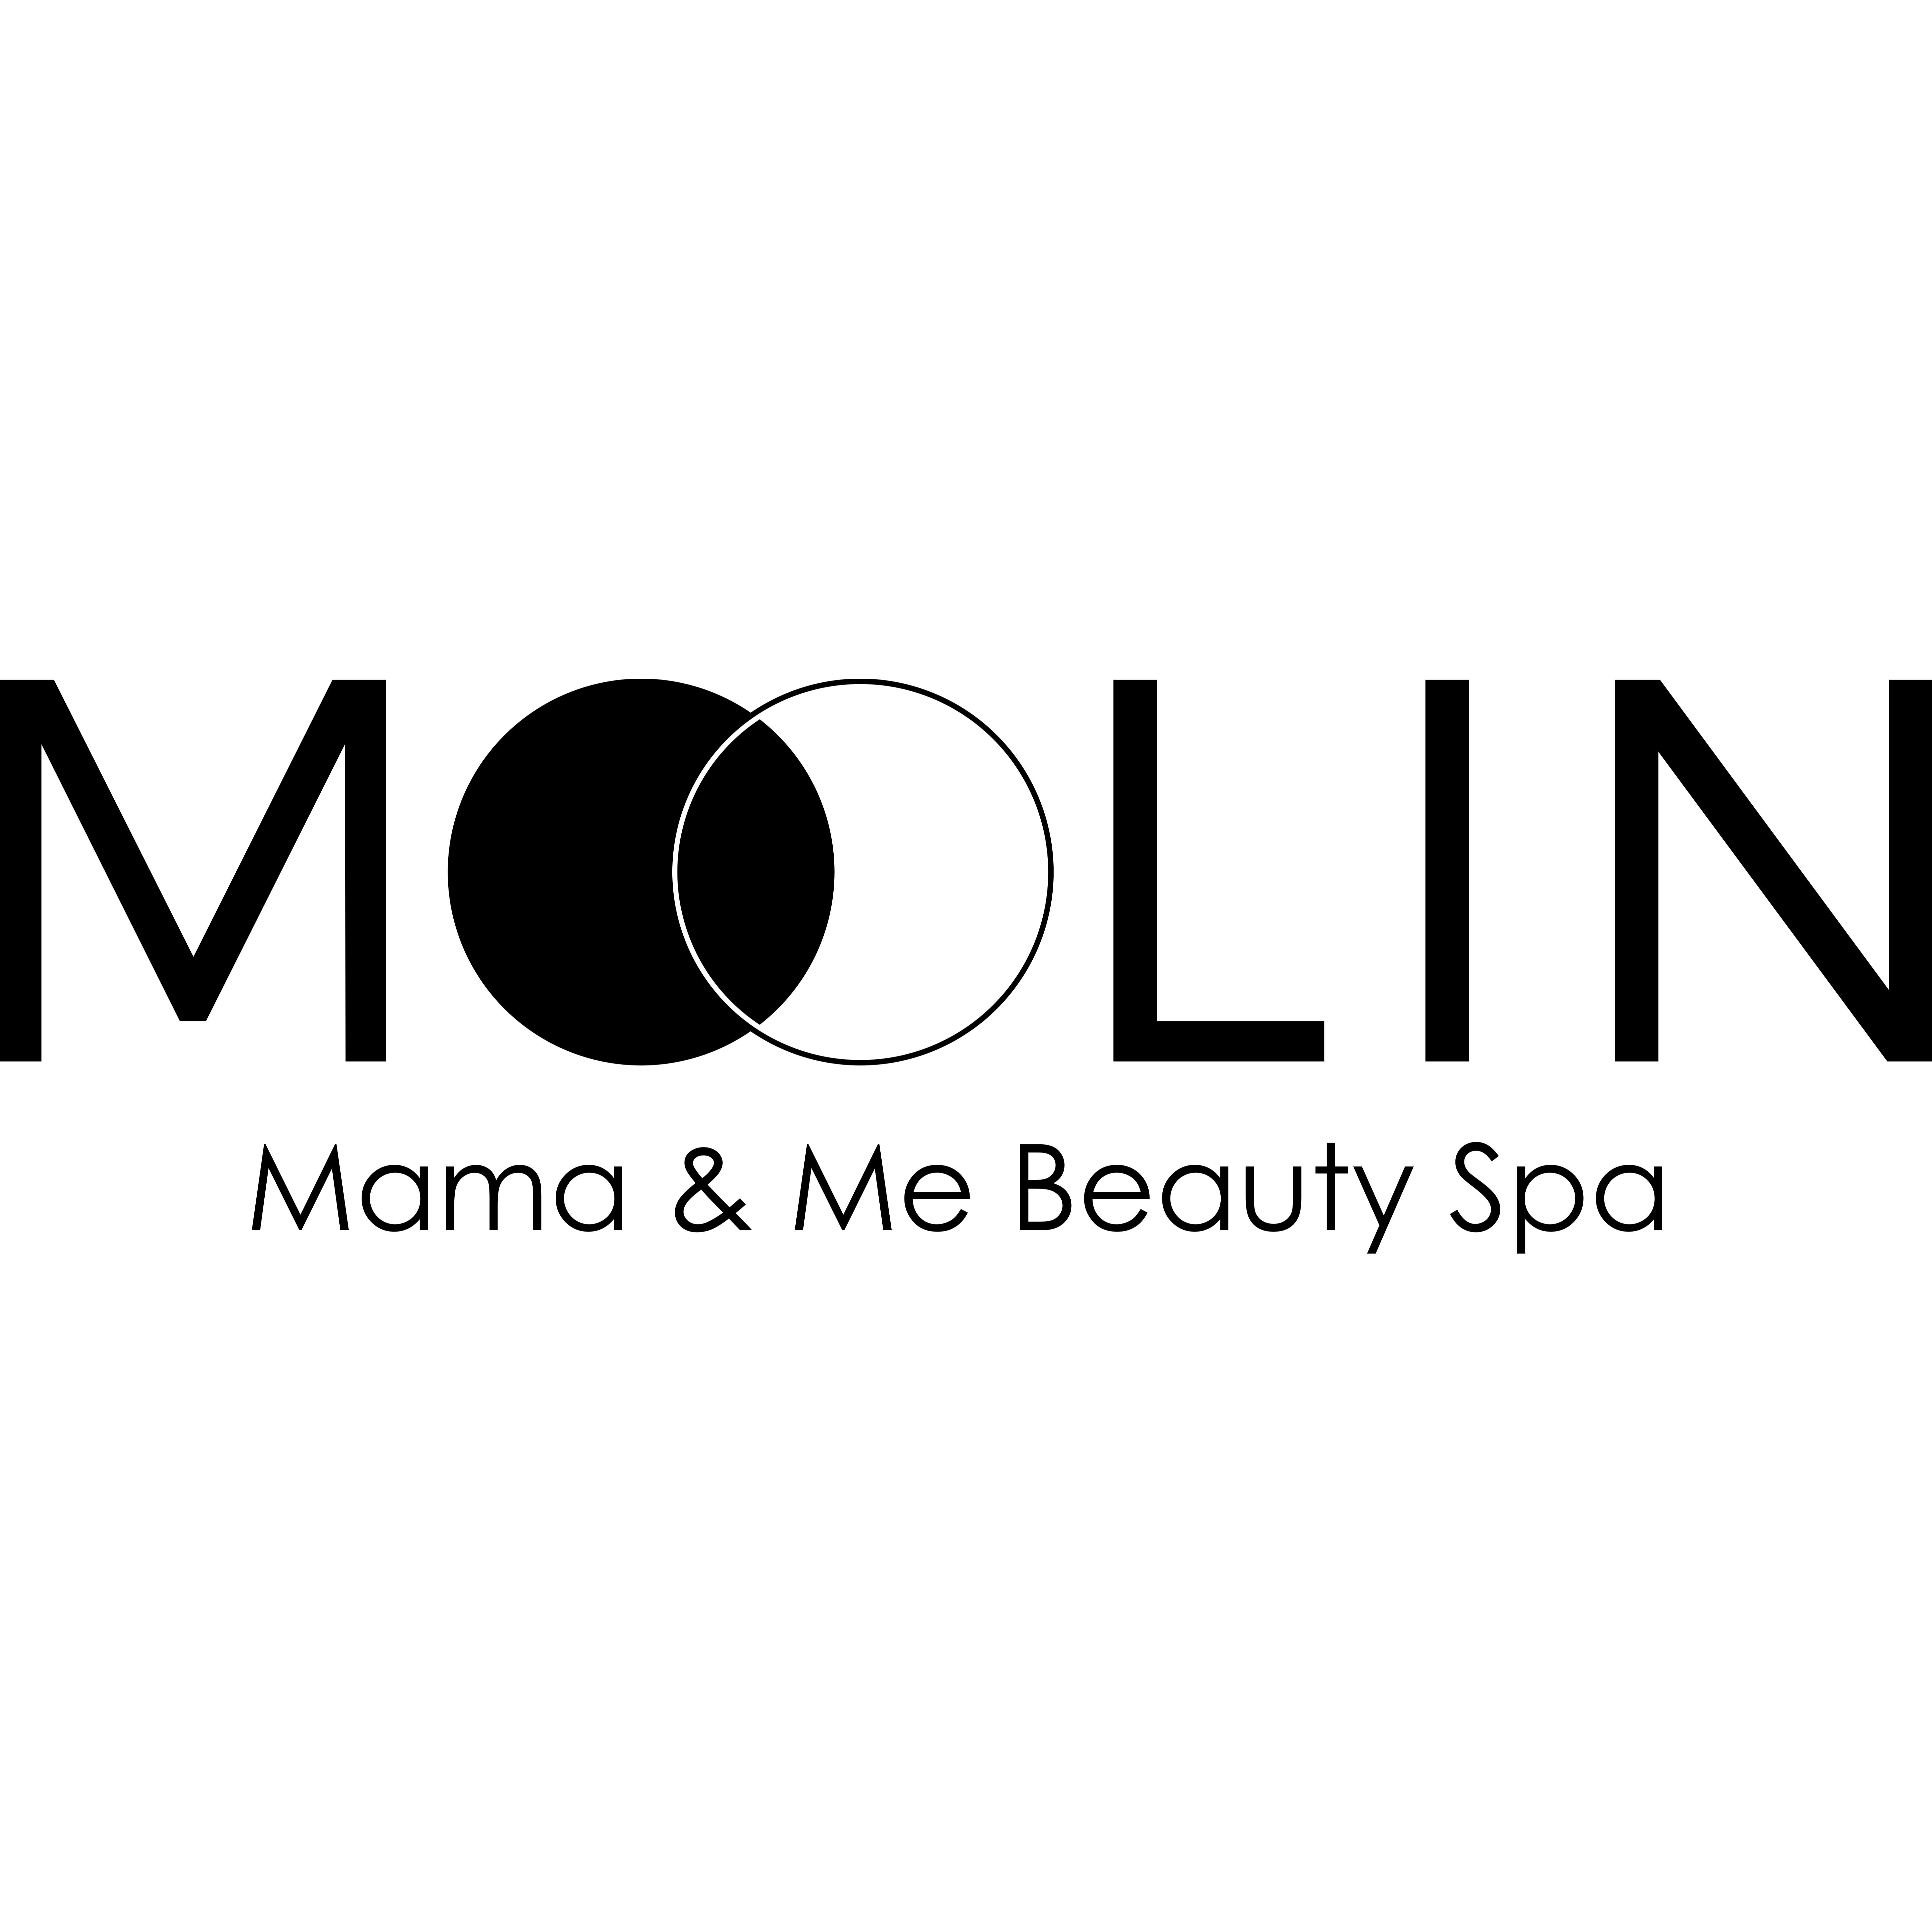 Moolin - Mama & Me Beauty Spa, Inh Aylin Polischuk in Düsseldorf - Logo